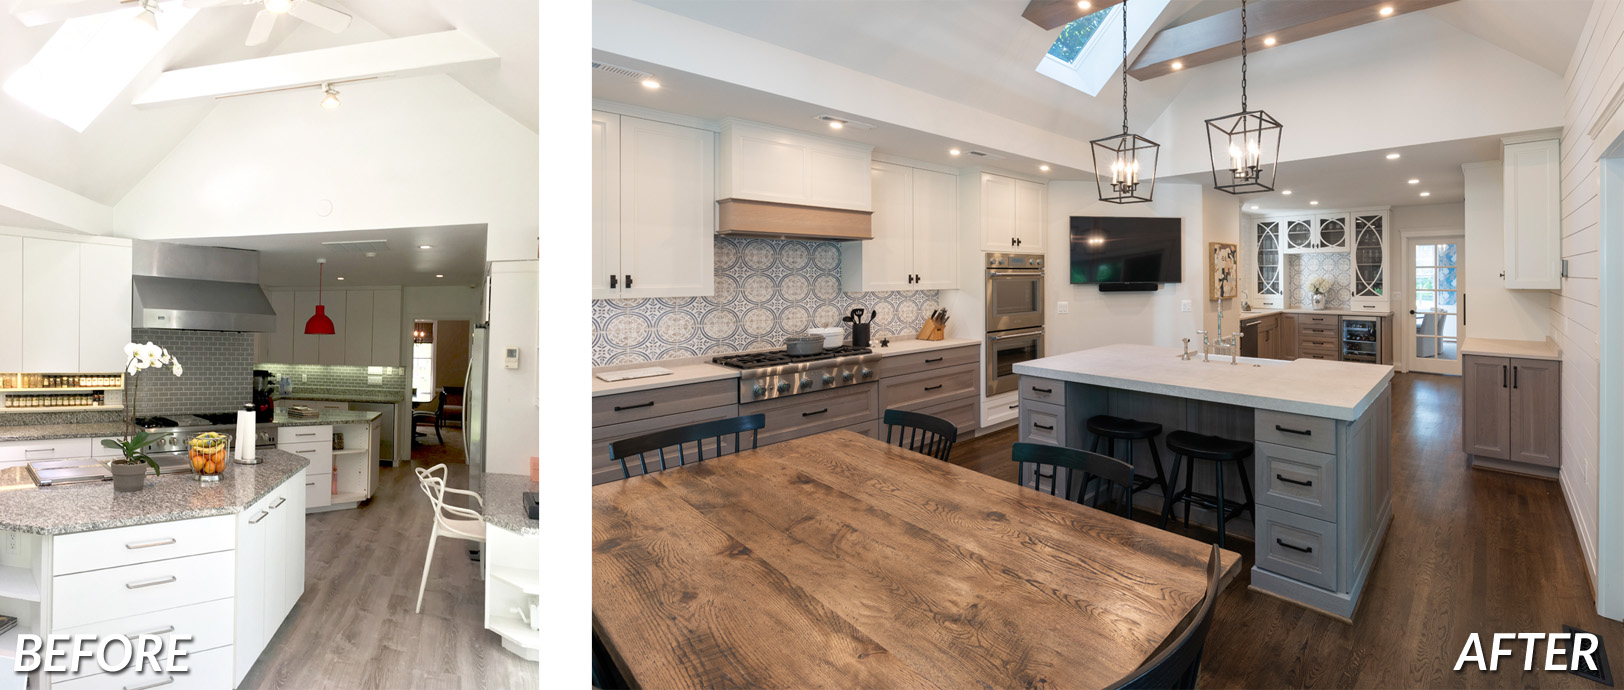 BOWA Design Design Build - DC Kitchen Renovaiton Before & After